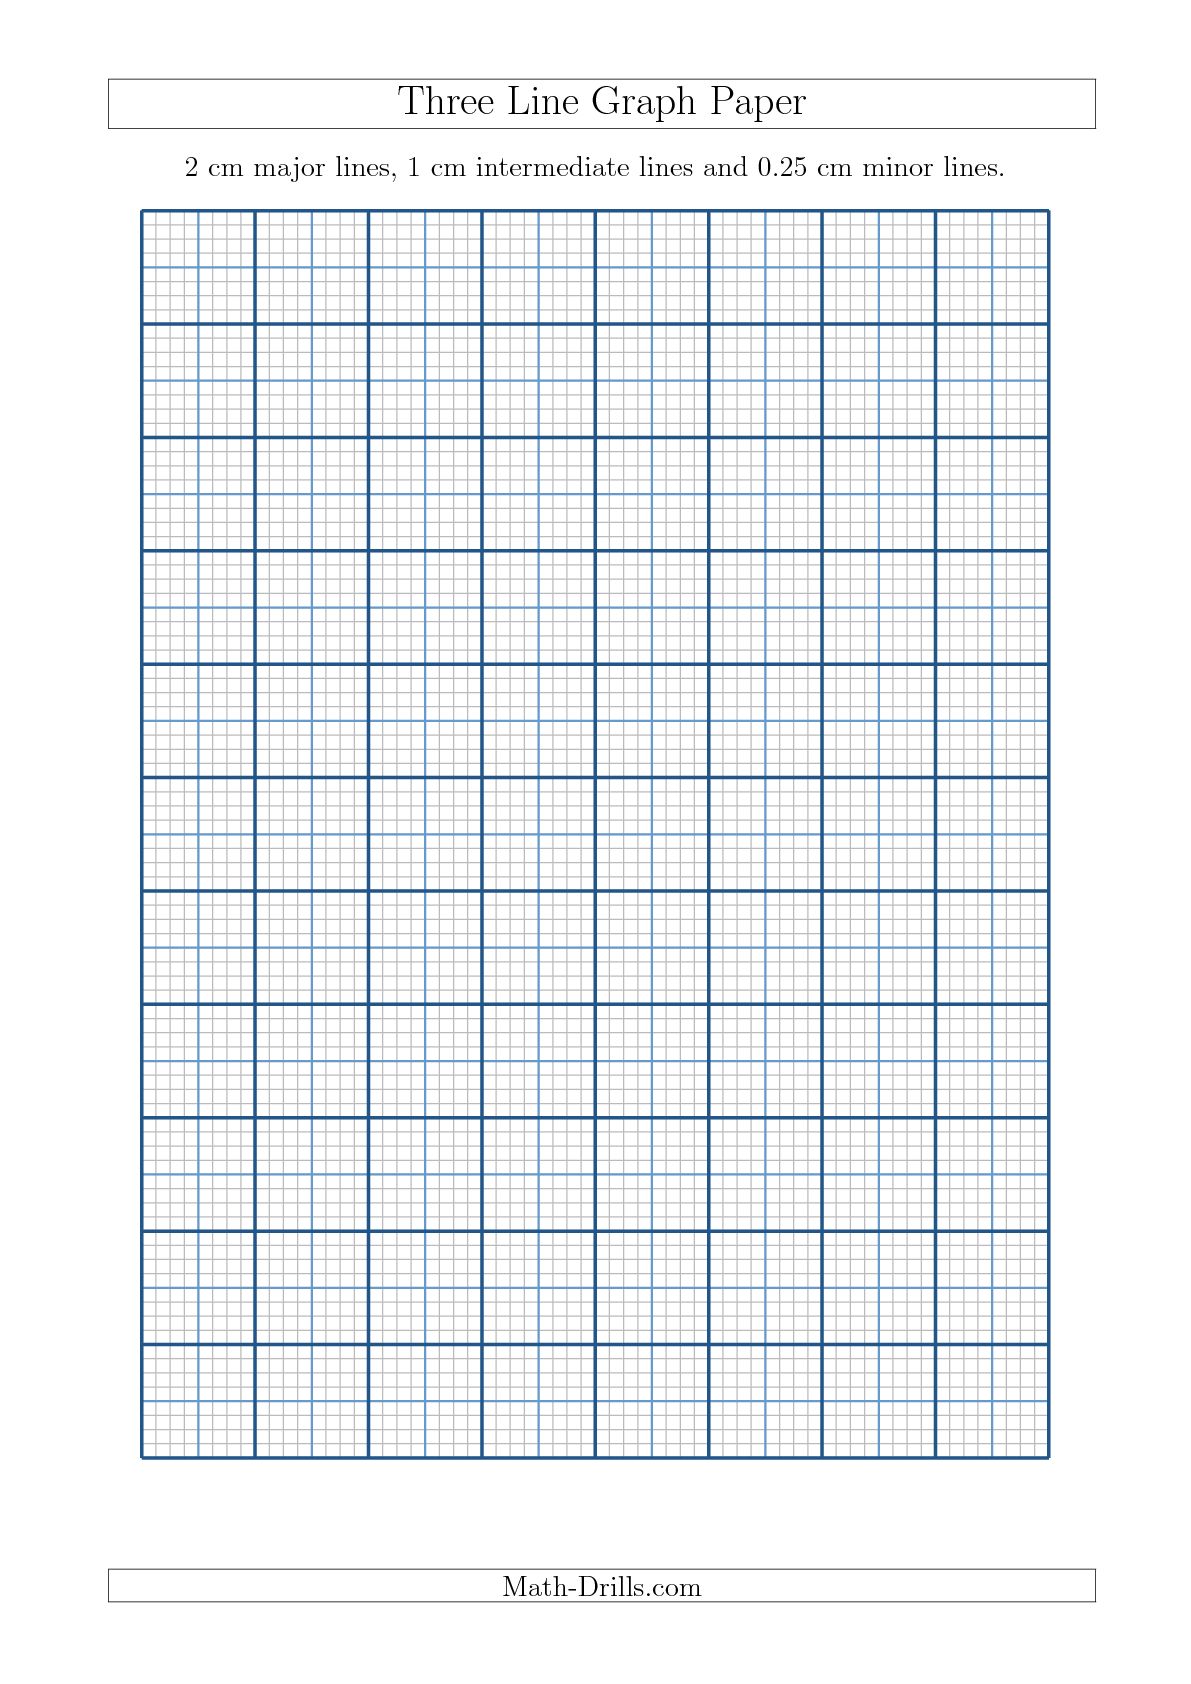 Printable metric graph paper 30x30 cm size Vector Image